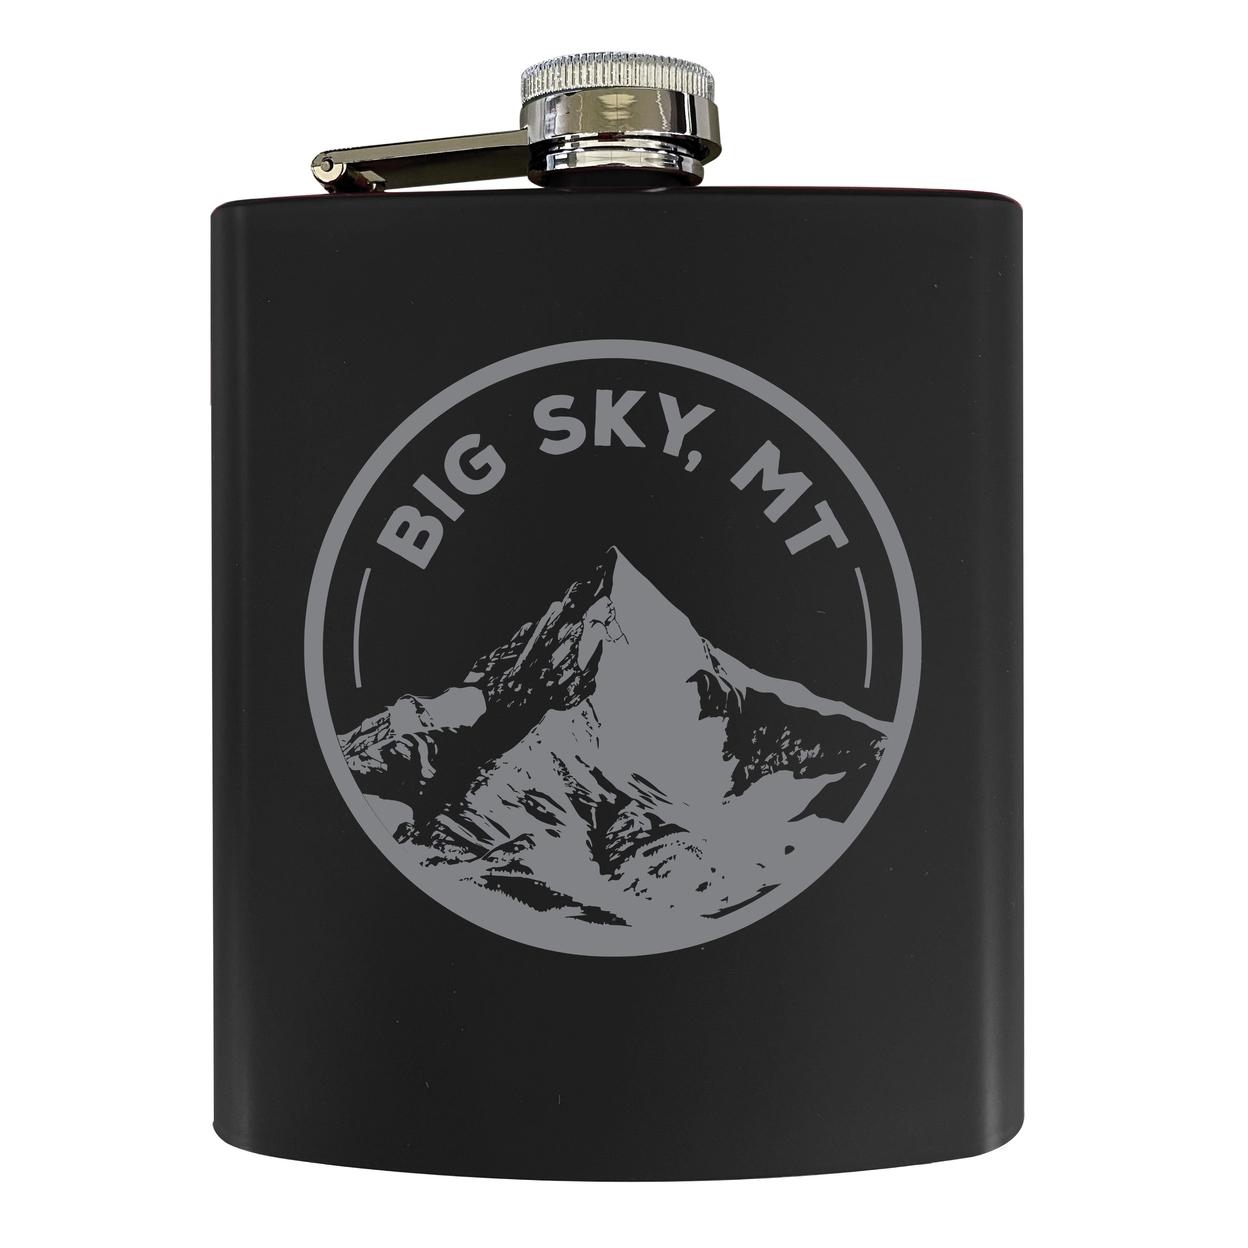 Big Sky Montana Souvenir 7 Oz Engraved Steel Flask Matte Finish - Seafoam,,2-Pack